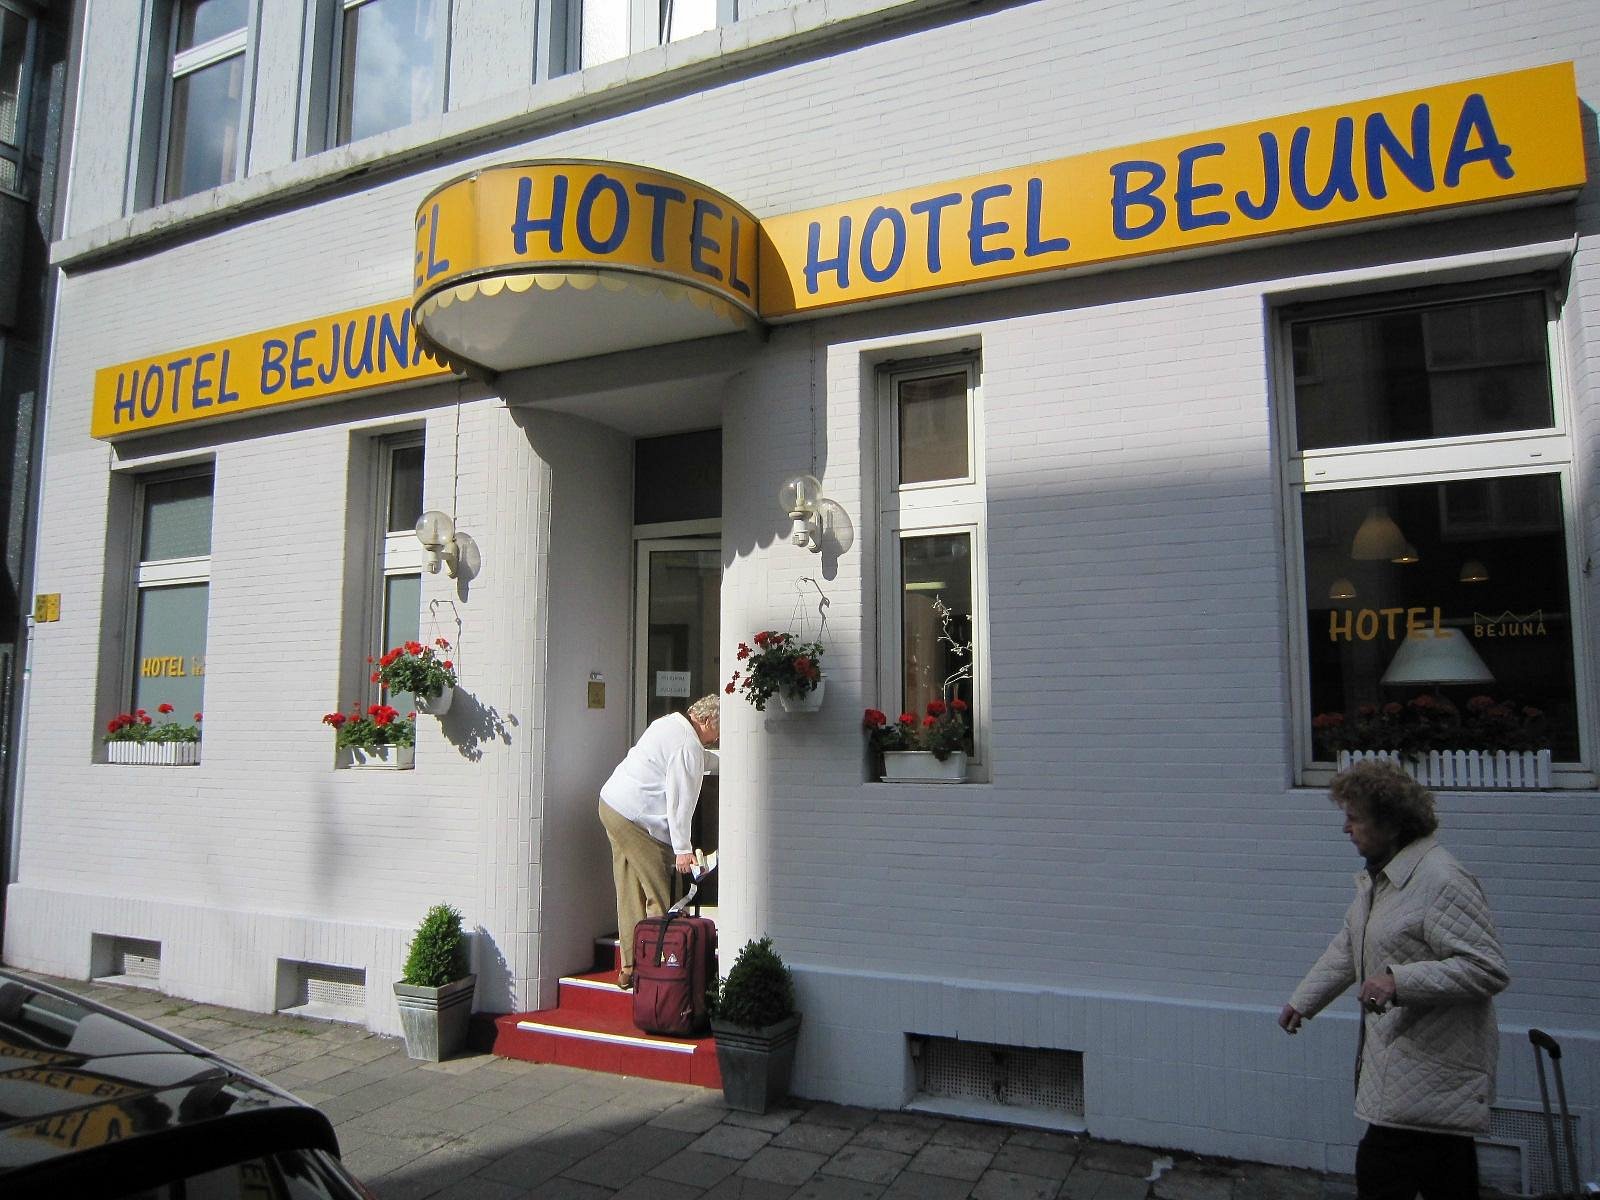 Hotel Bejuna image